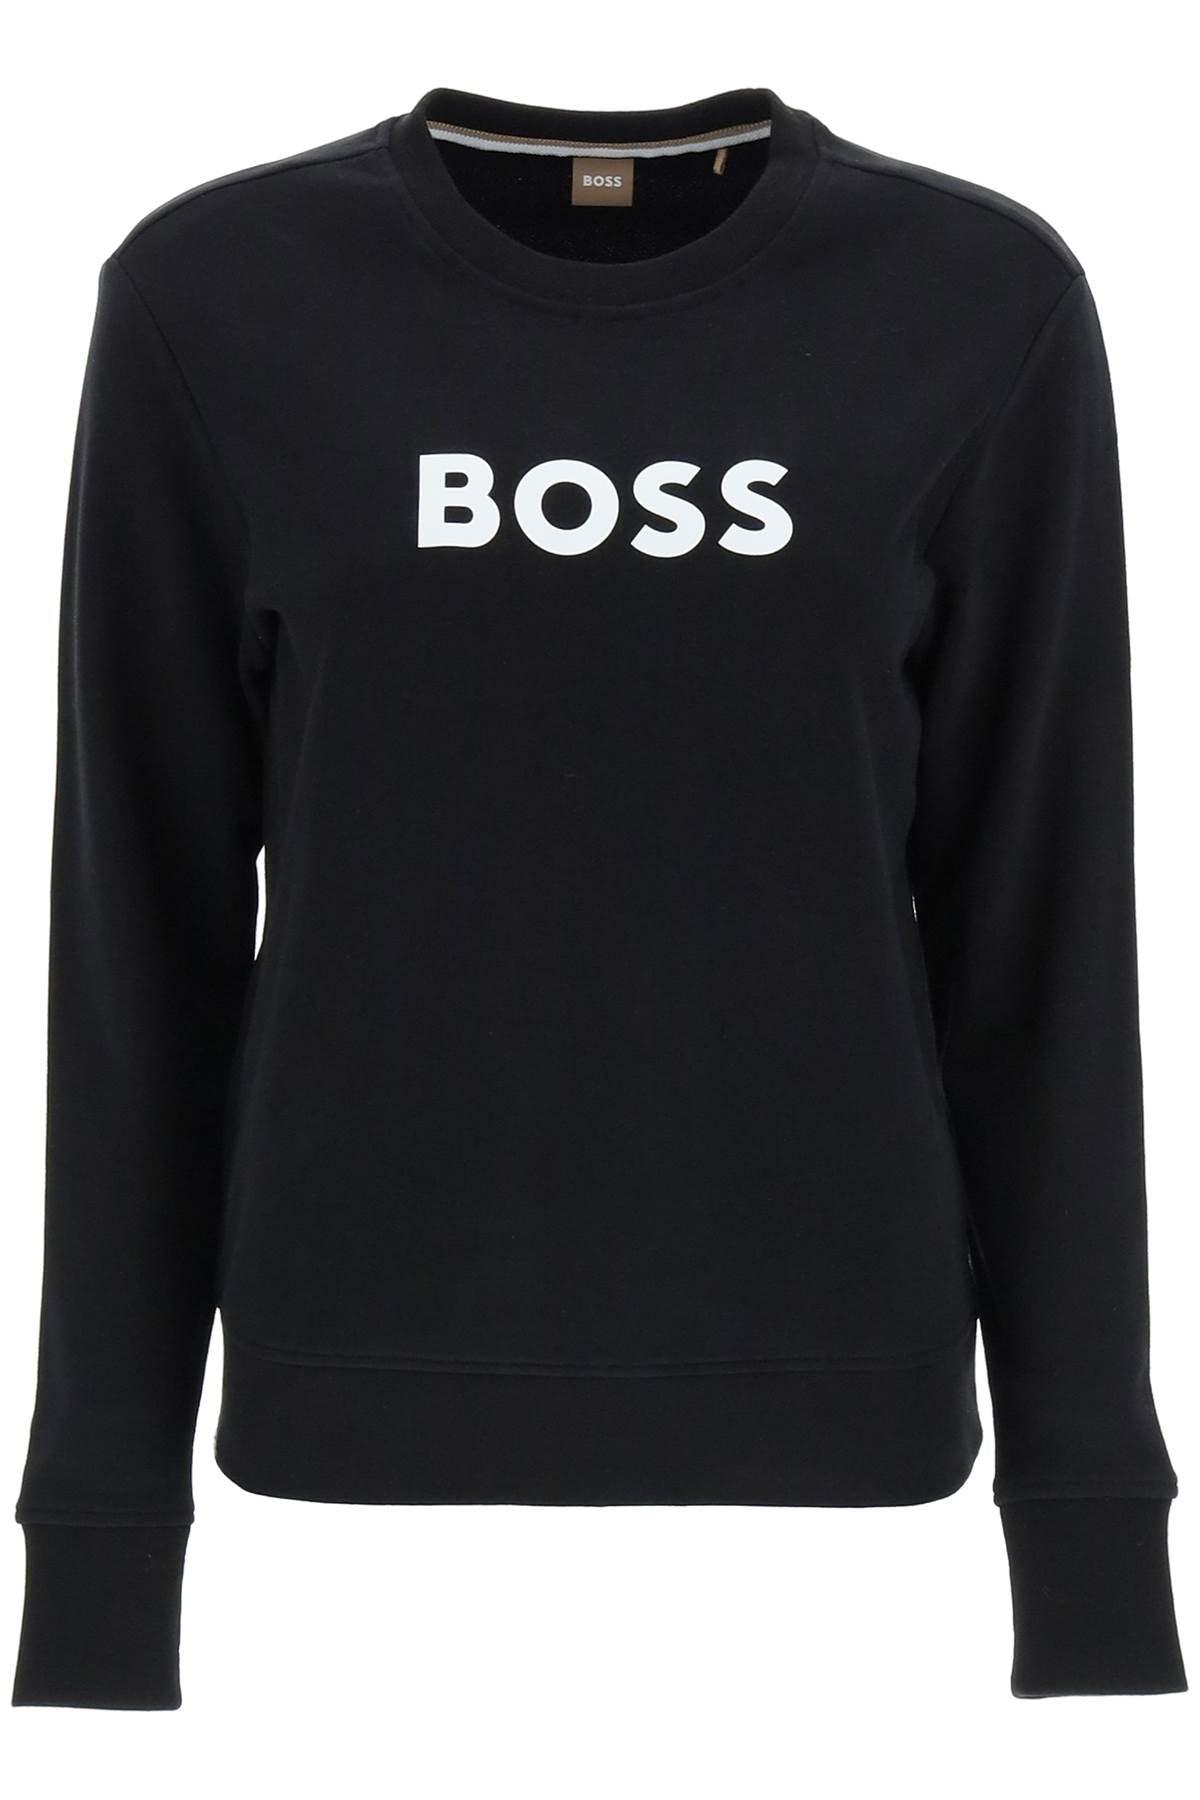 BOSS by HUGO BOSS Logo Print Crew-neck Sweatshirt in Black | Lyst